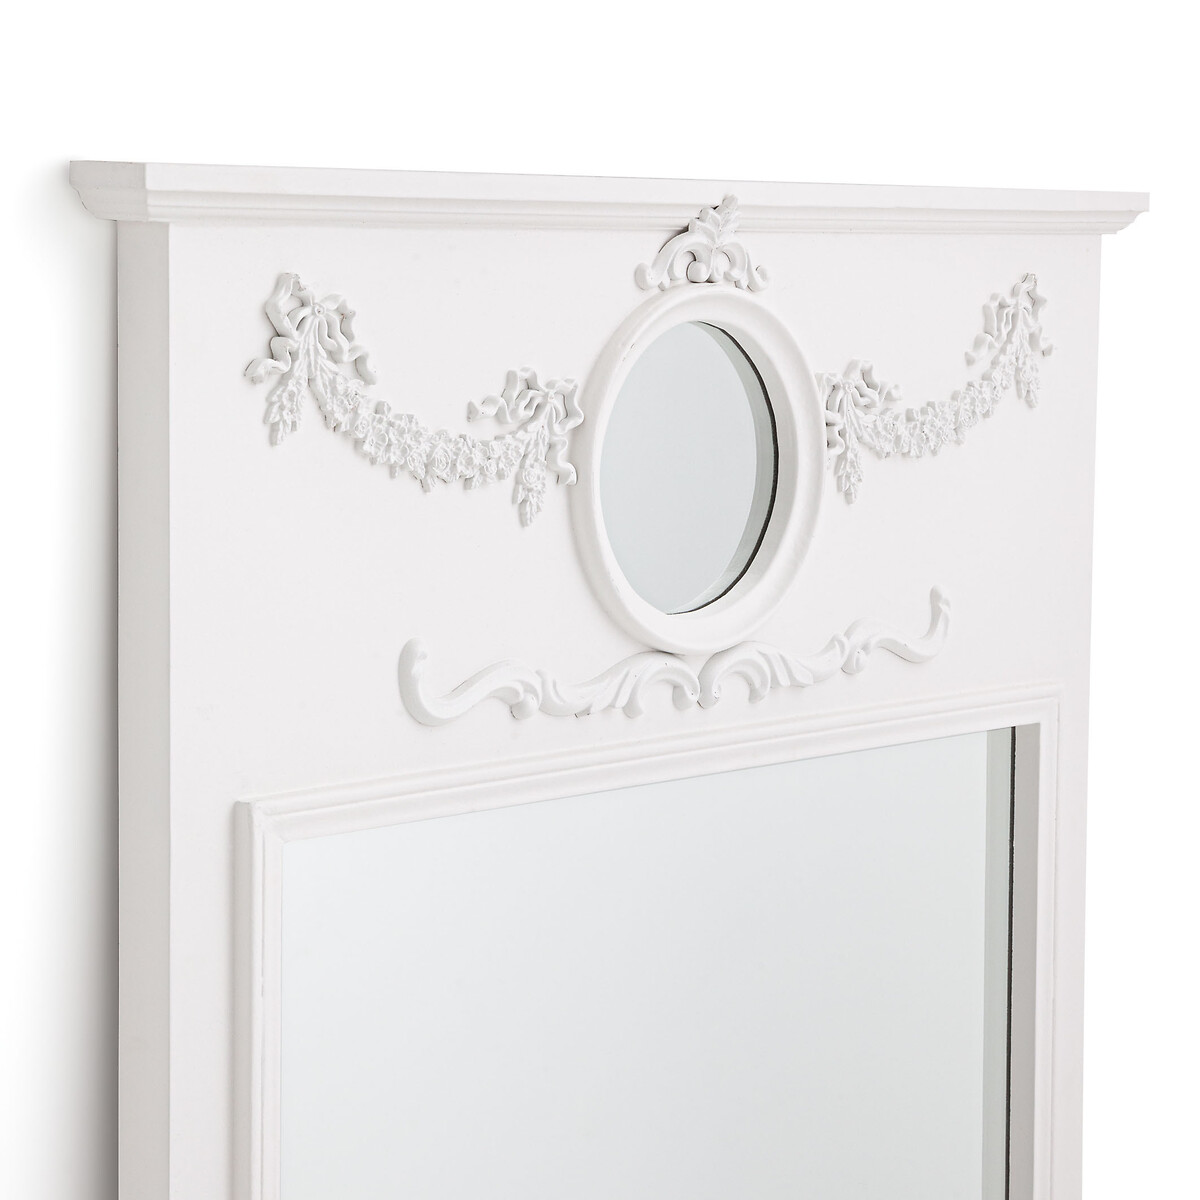 Зеркало-трюмо Из дерева 117x75 см Trumori единый размер белый LaRedoute - фото 3